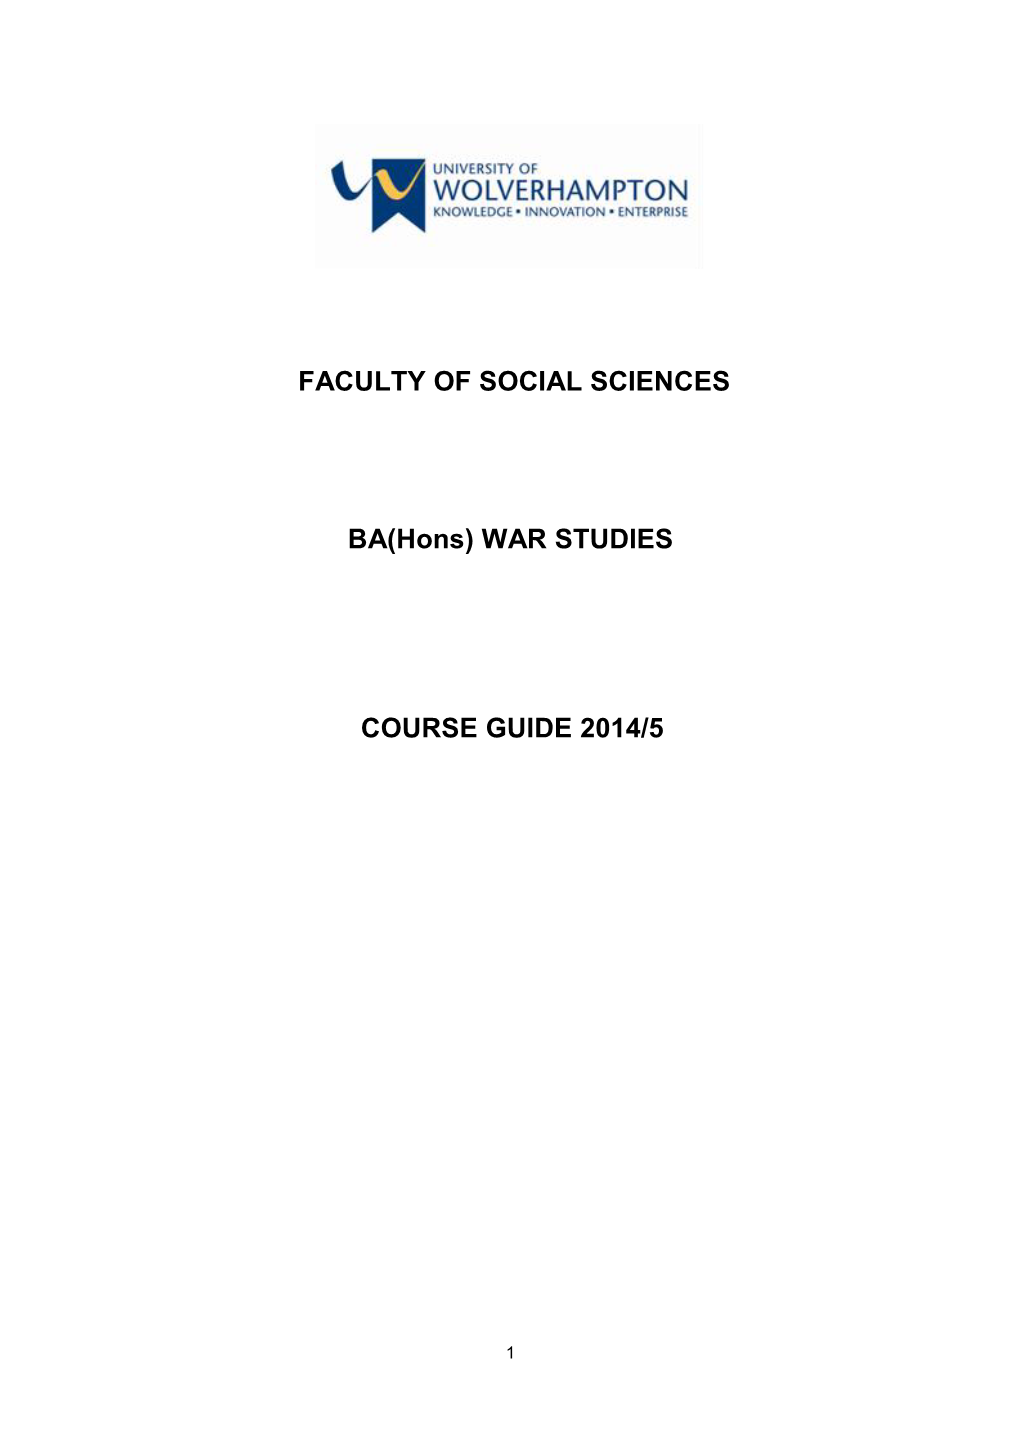 War Studies Course Guide 2014/5